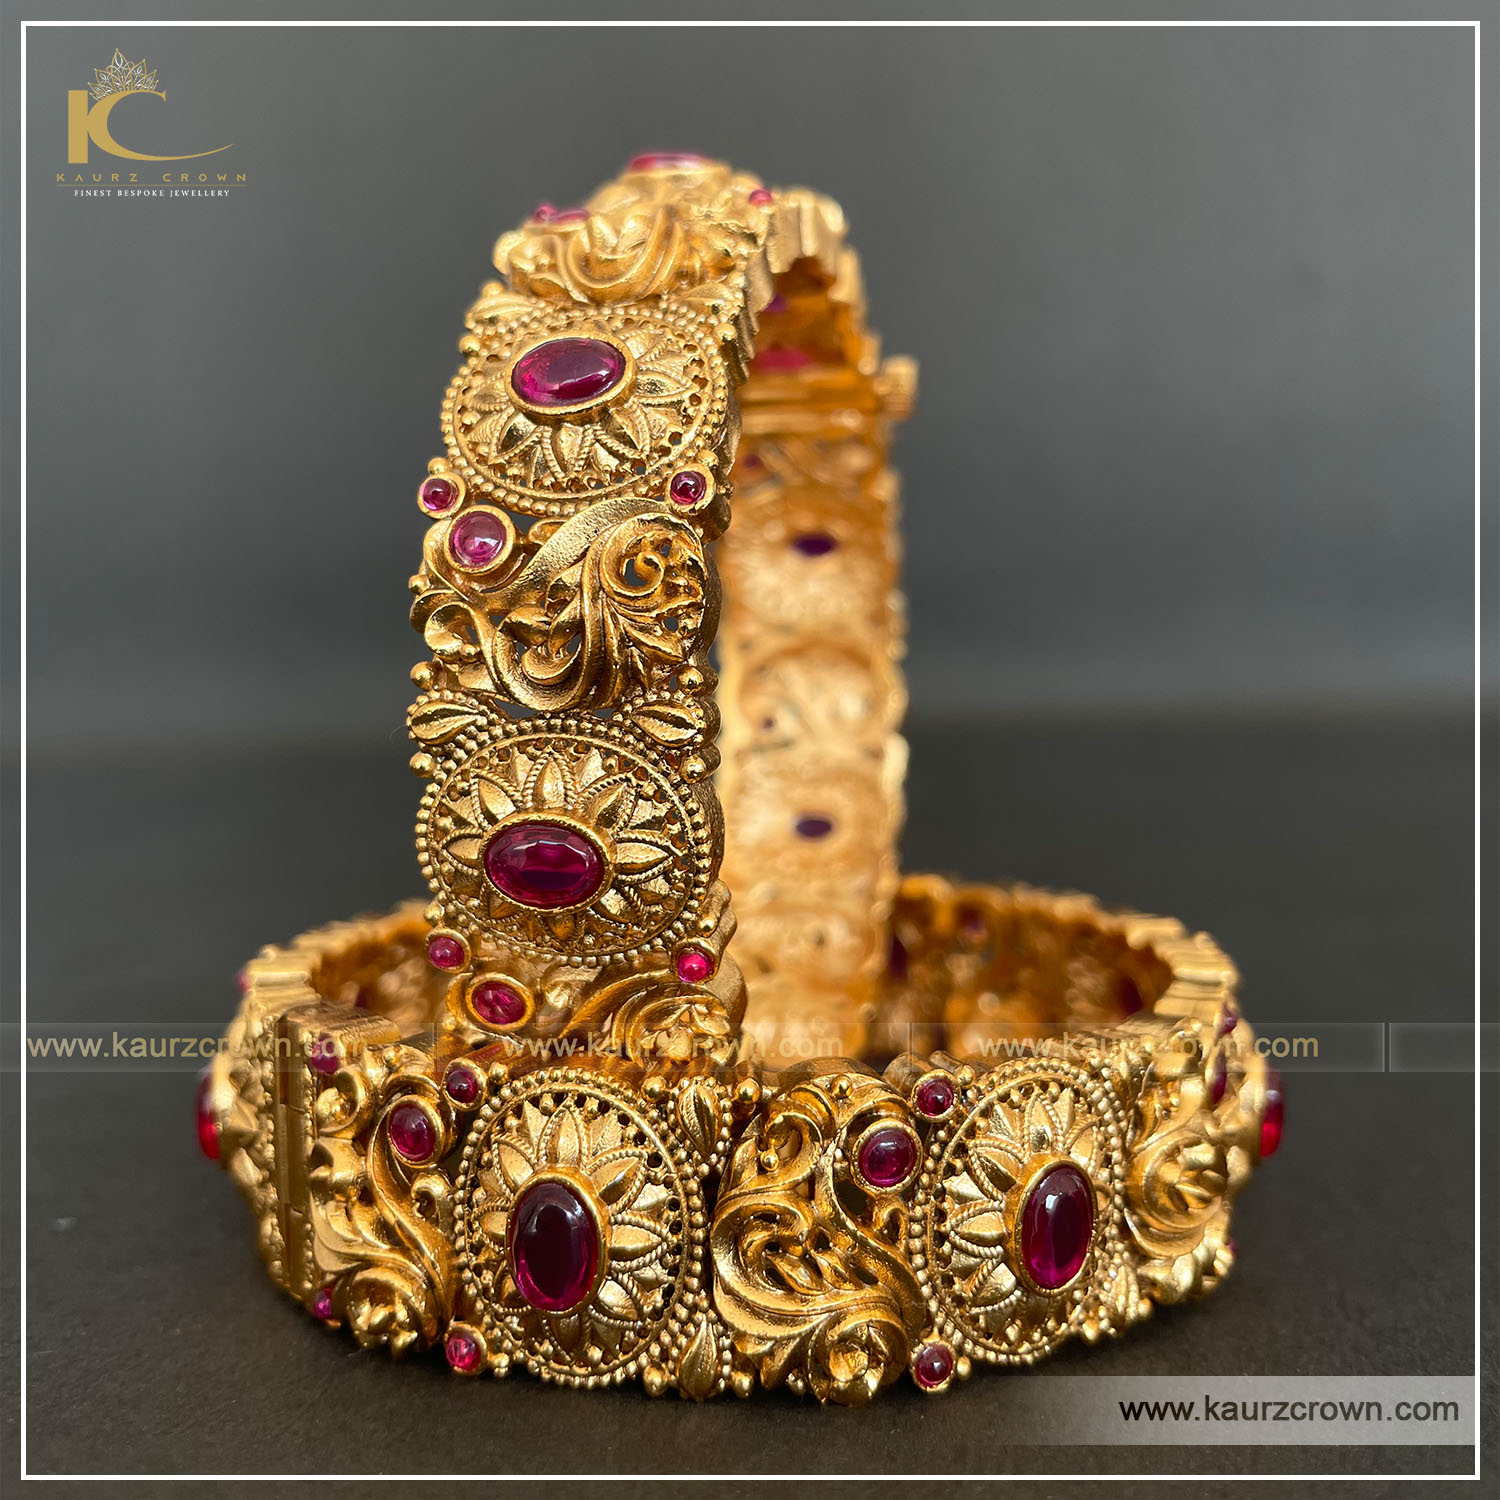 Samreen Traditional Gold Plated Bangles , gold plated , bangles , kaurz crown , punjabi jewellery